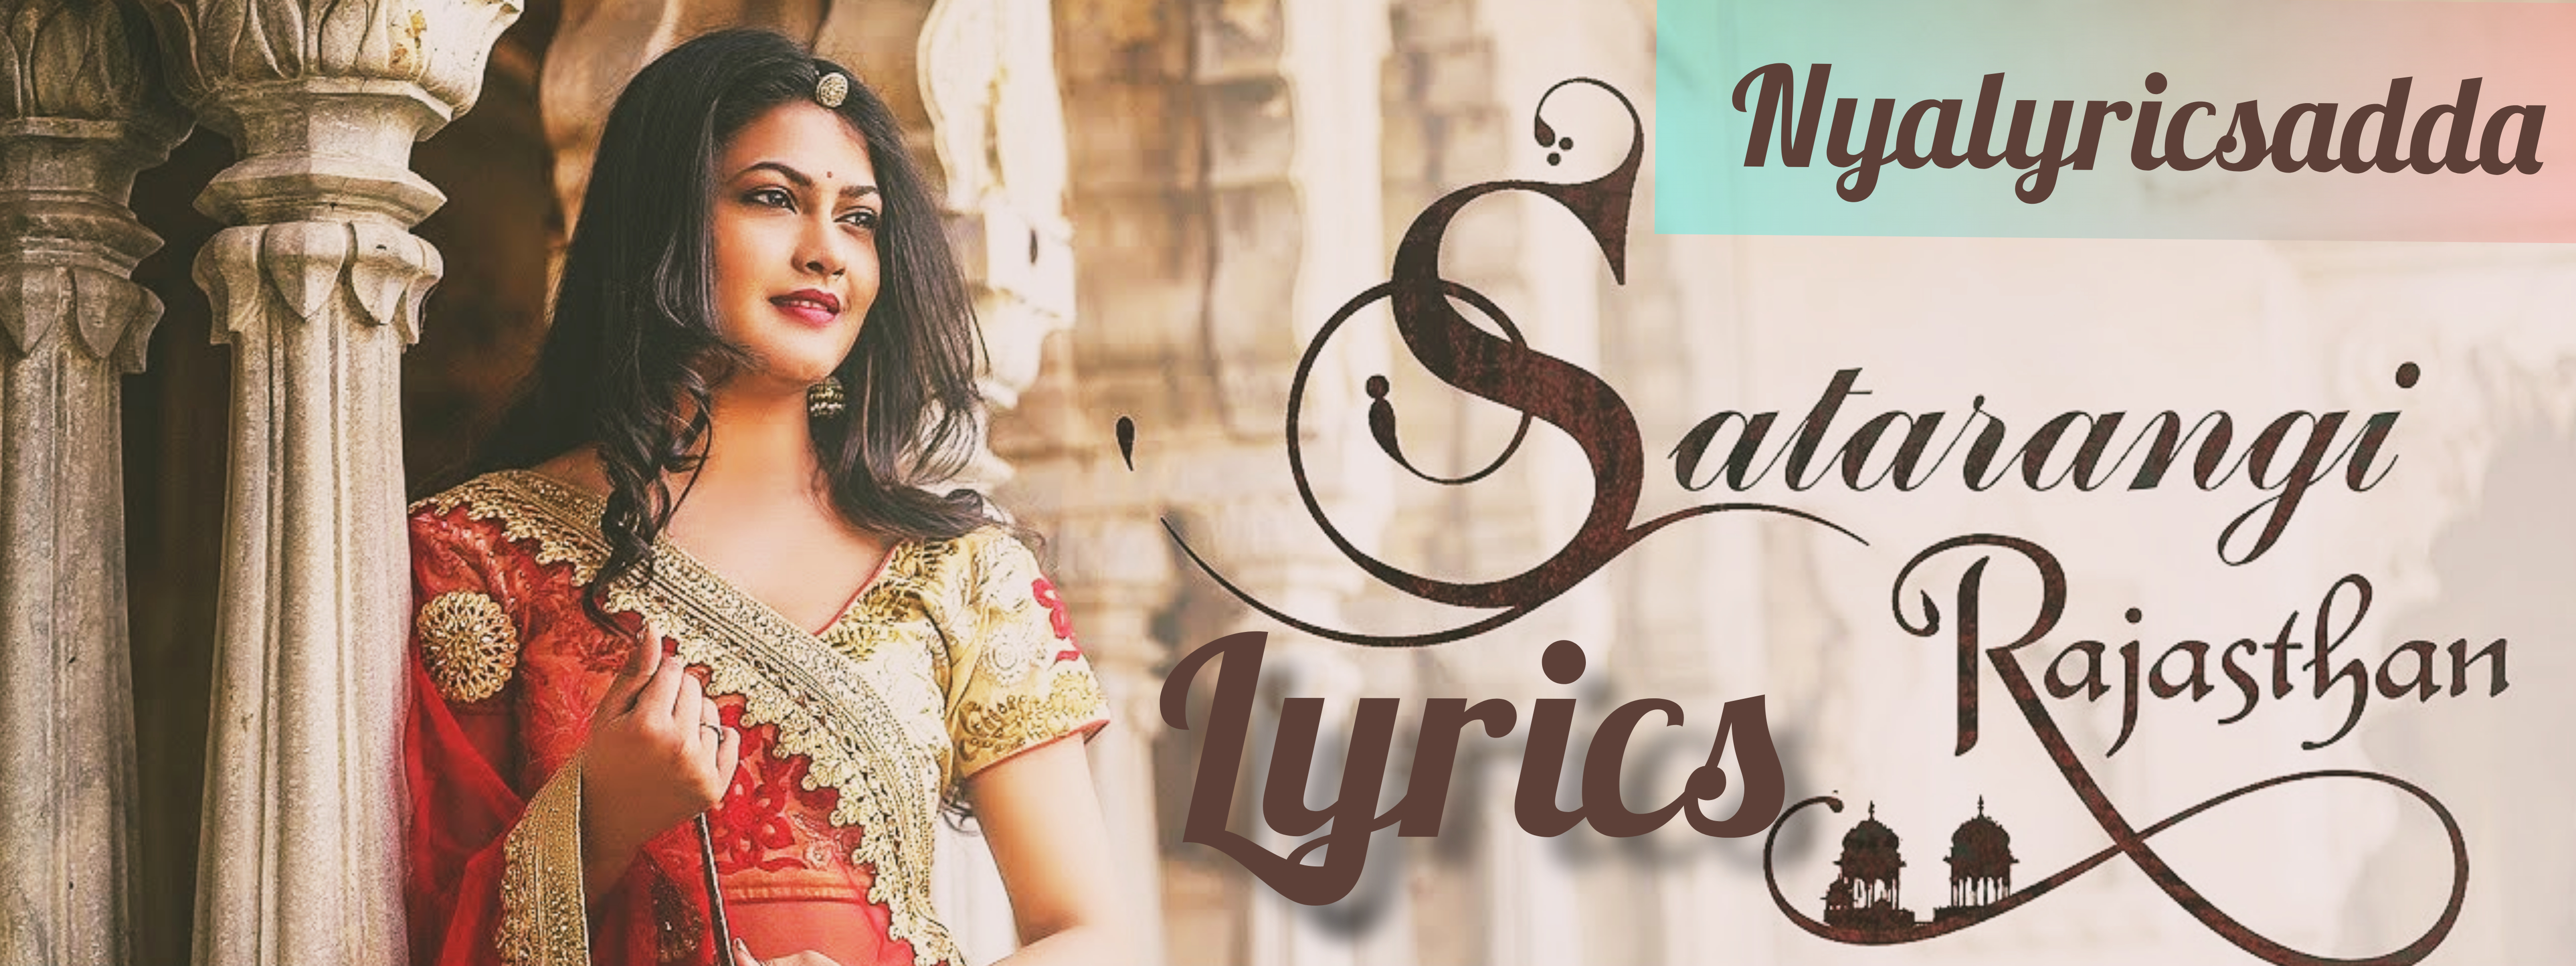 Satarangi Rajasthan Lyrics In Englsih And Hindi | Latest Rajasthani Song | Priyanka Barve | Hemang Joshi |